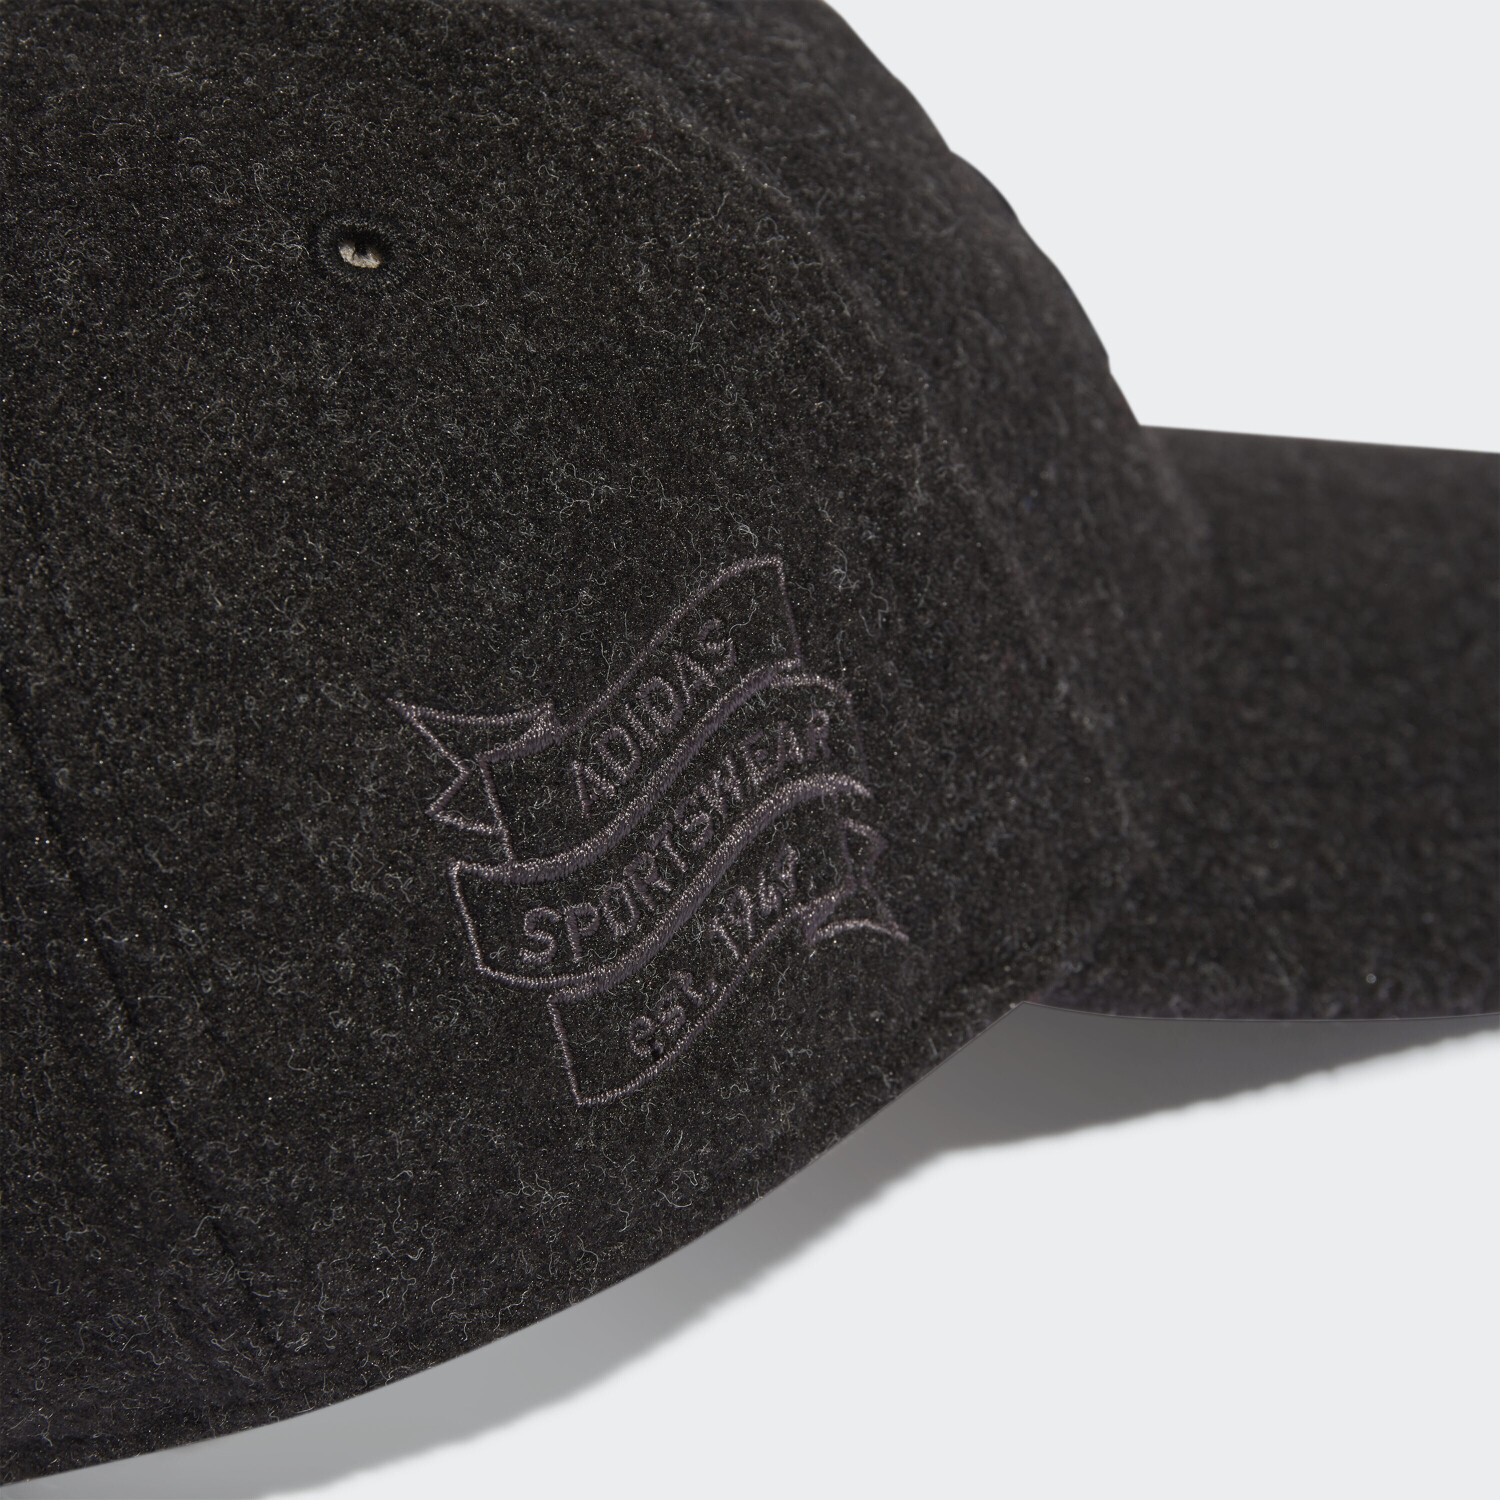 Adidas Wool Baseball Kappe (IB2646) € | heather/black grey Preisvergleich bei dark 22,50 ab